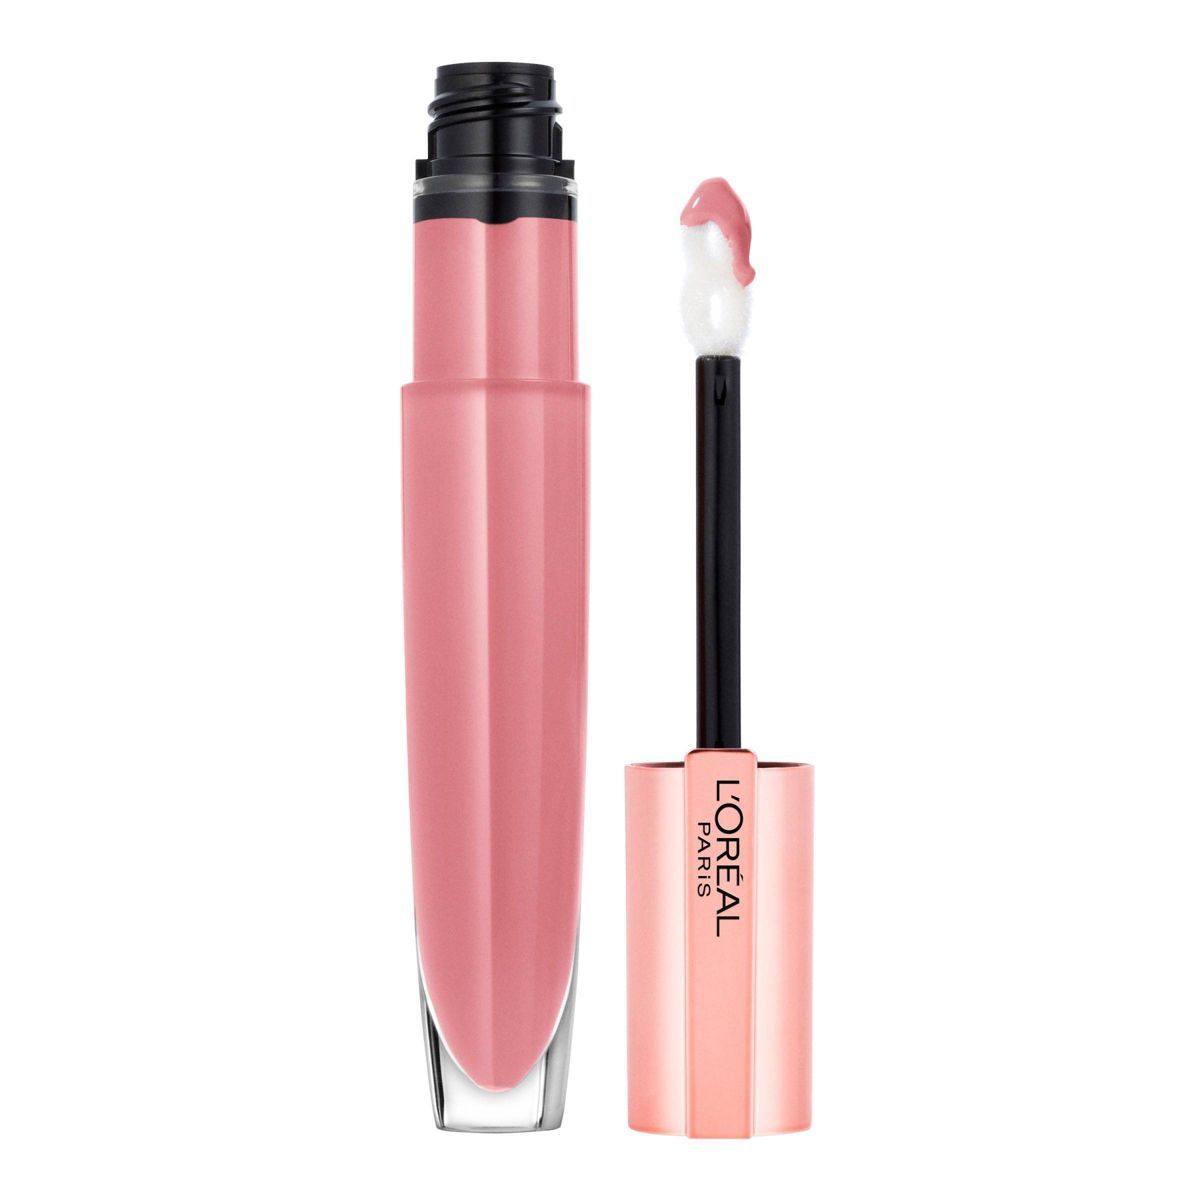 L'Oreal Paris Glow Paradise Lip Gloss with Pomegranate Extract - Blissful Blush - 0.23 fl oz | Target